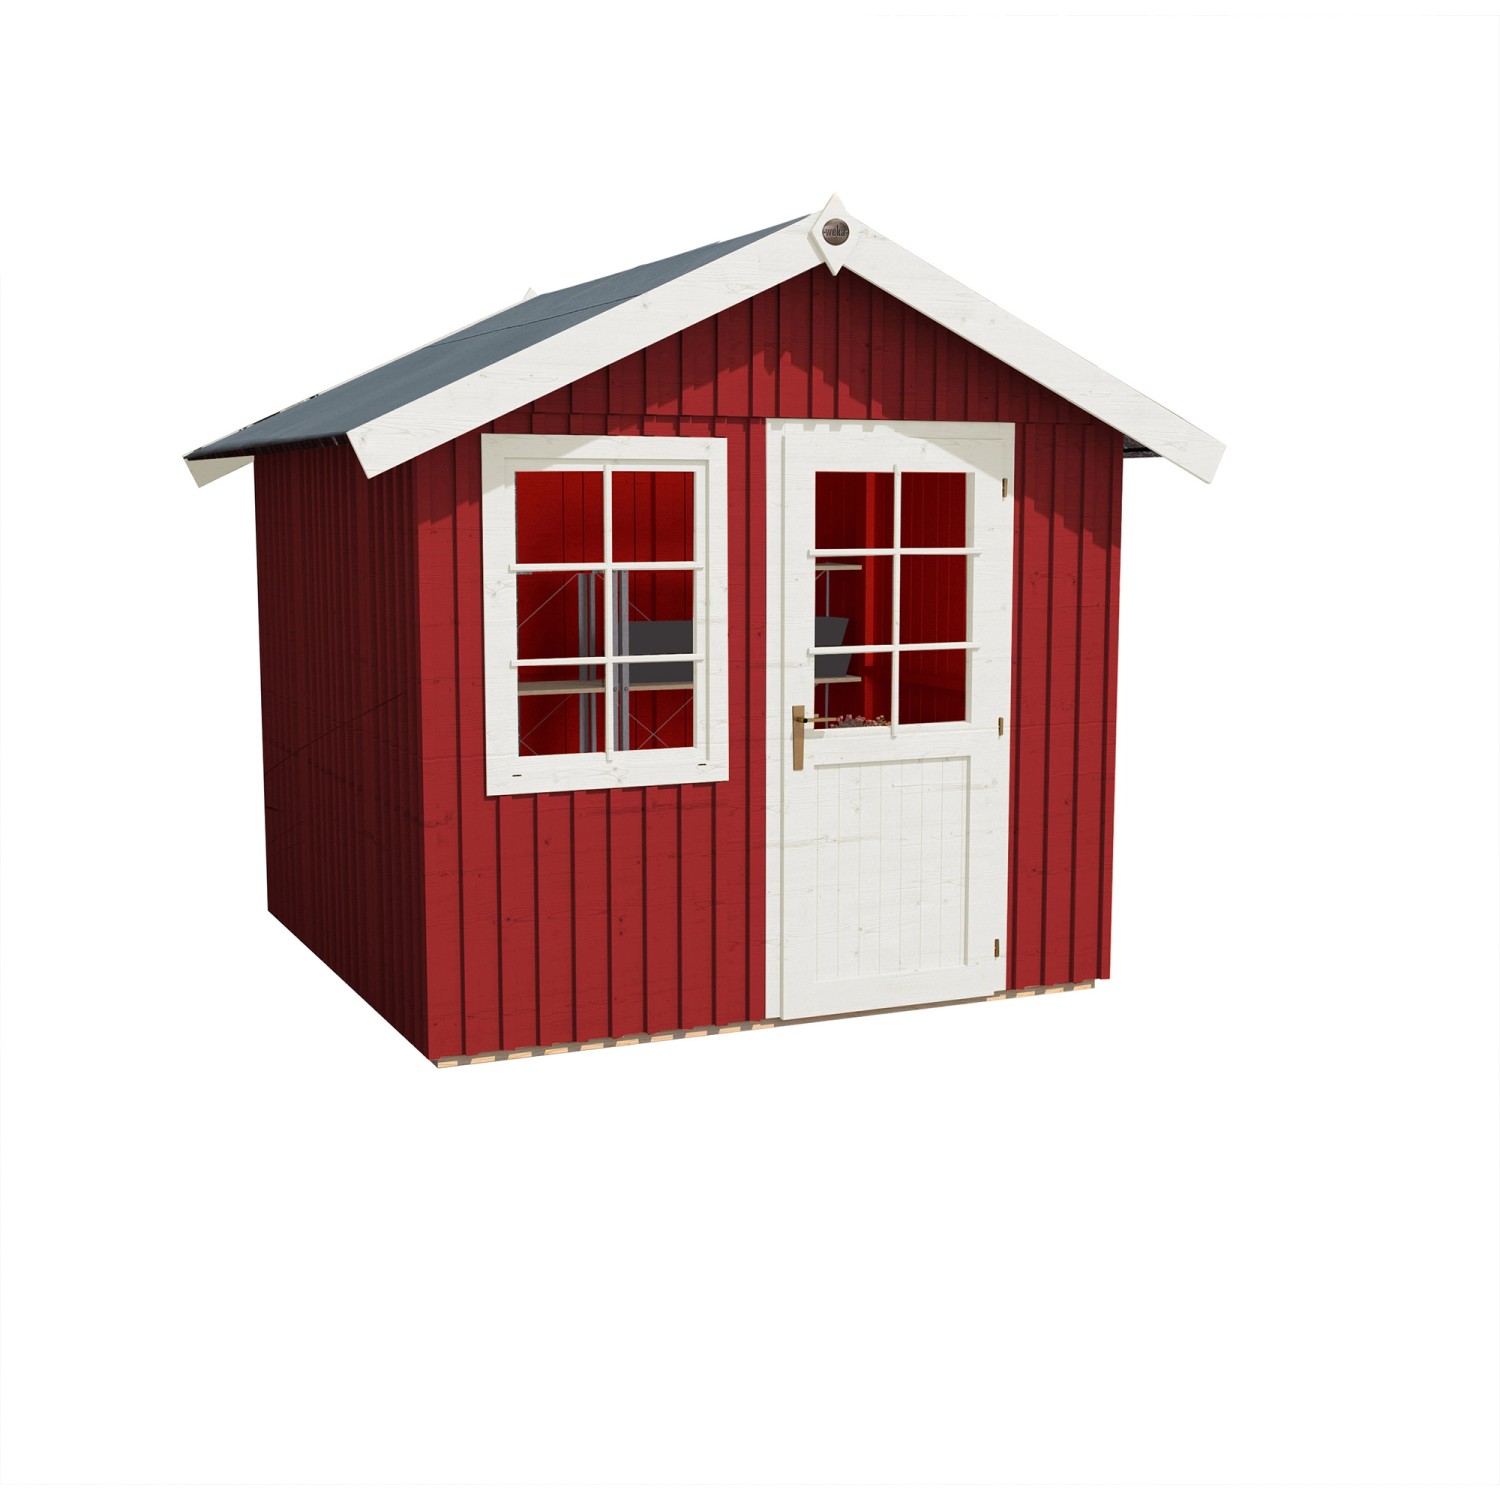 Weka Holz-Gartenhaus Satteldach bei kaufen 298 OBI cm Lasiert